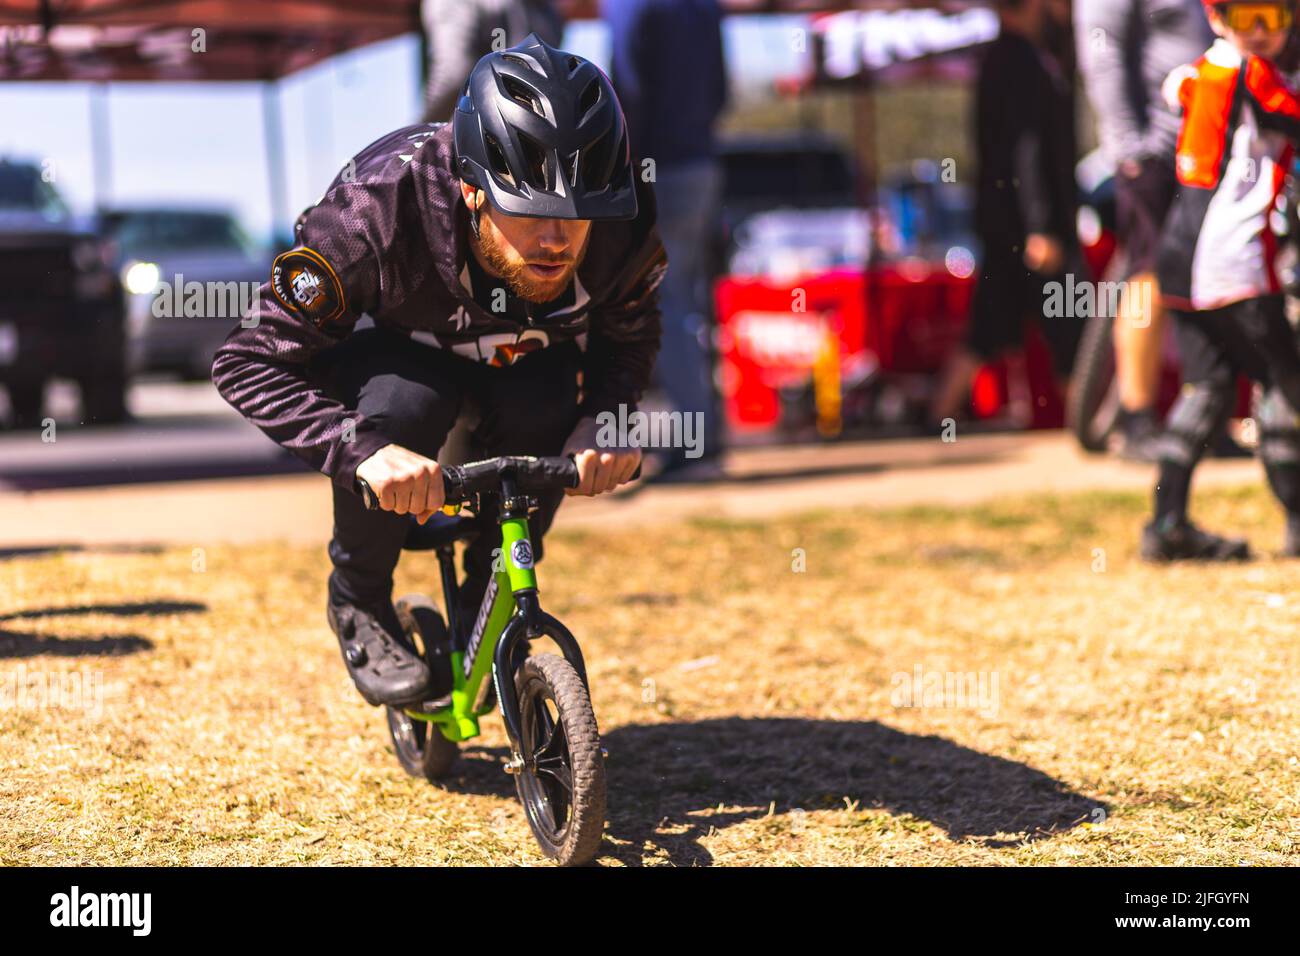 A Caucasian man sitting on a mini bike during the DFW metroplex race in Texas Stock Photo